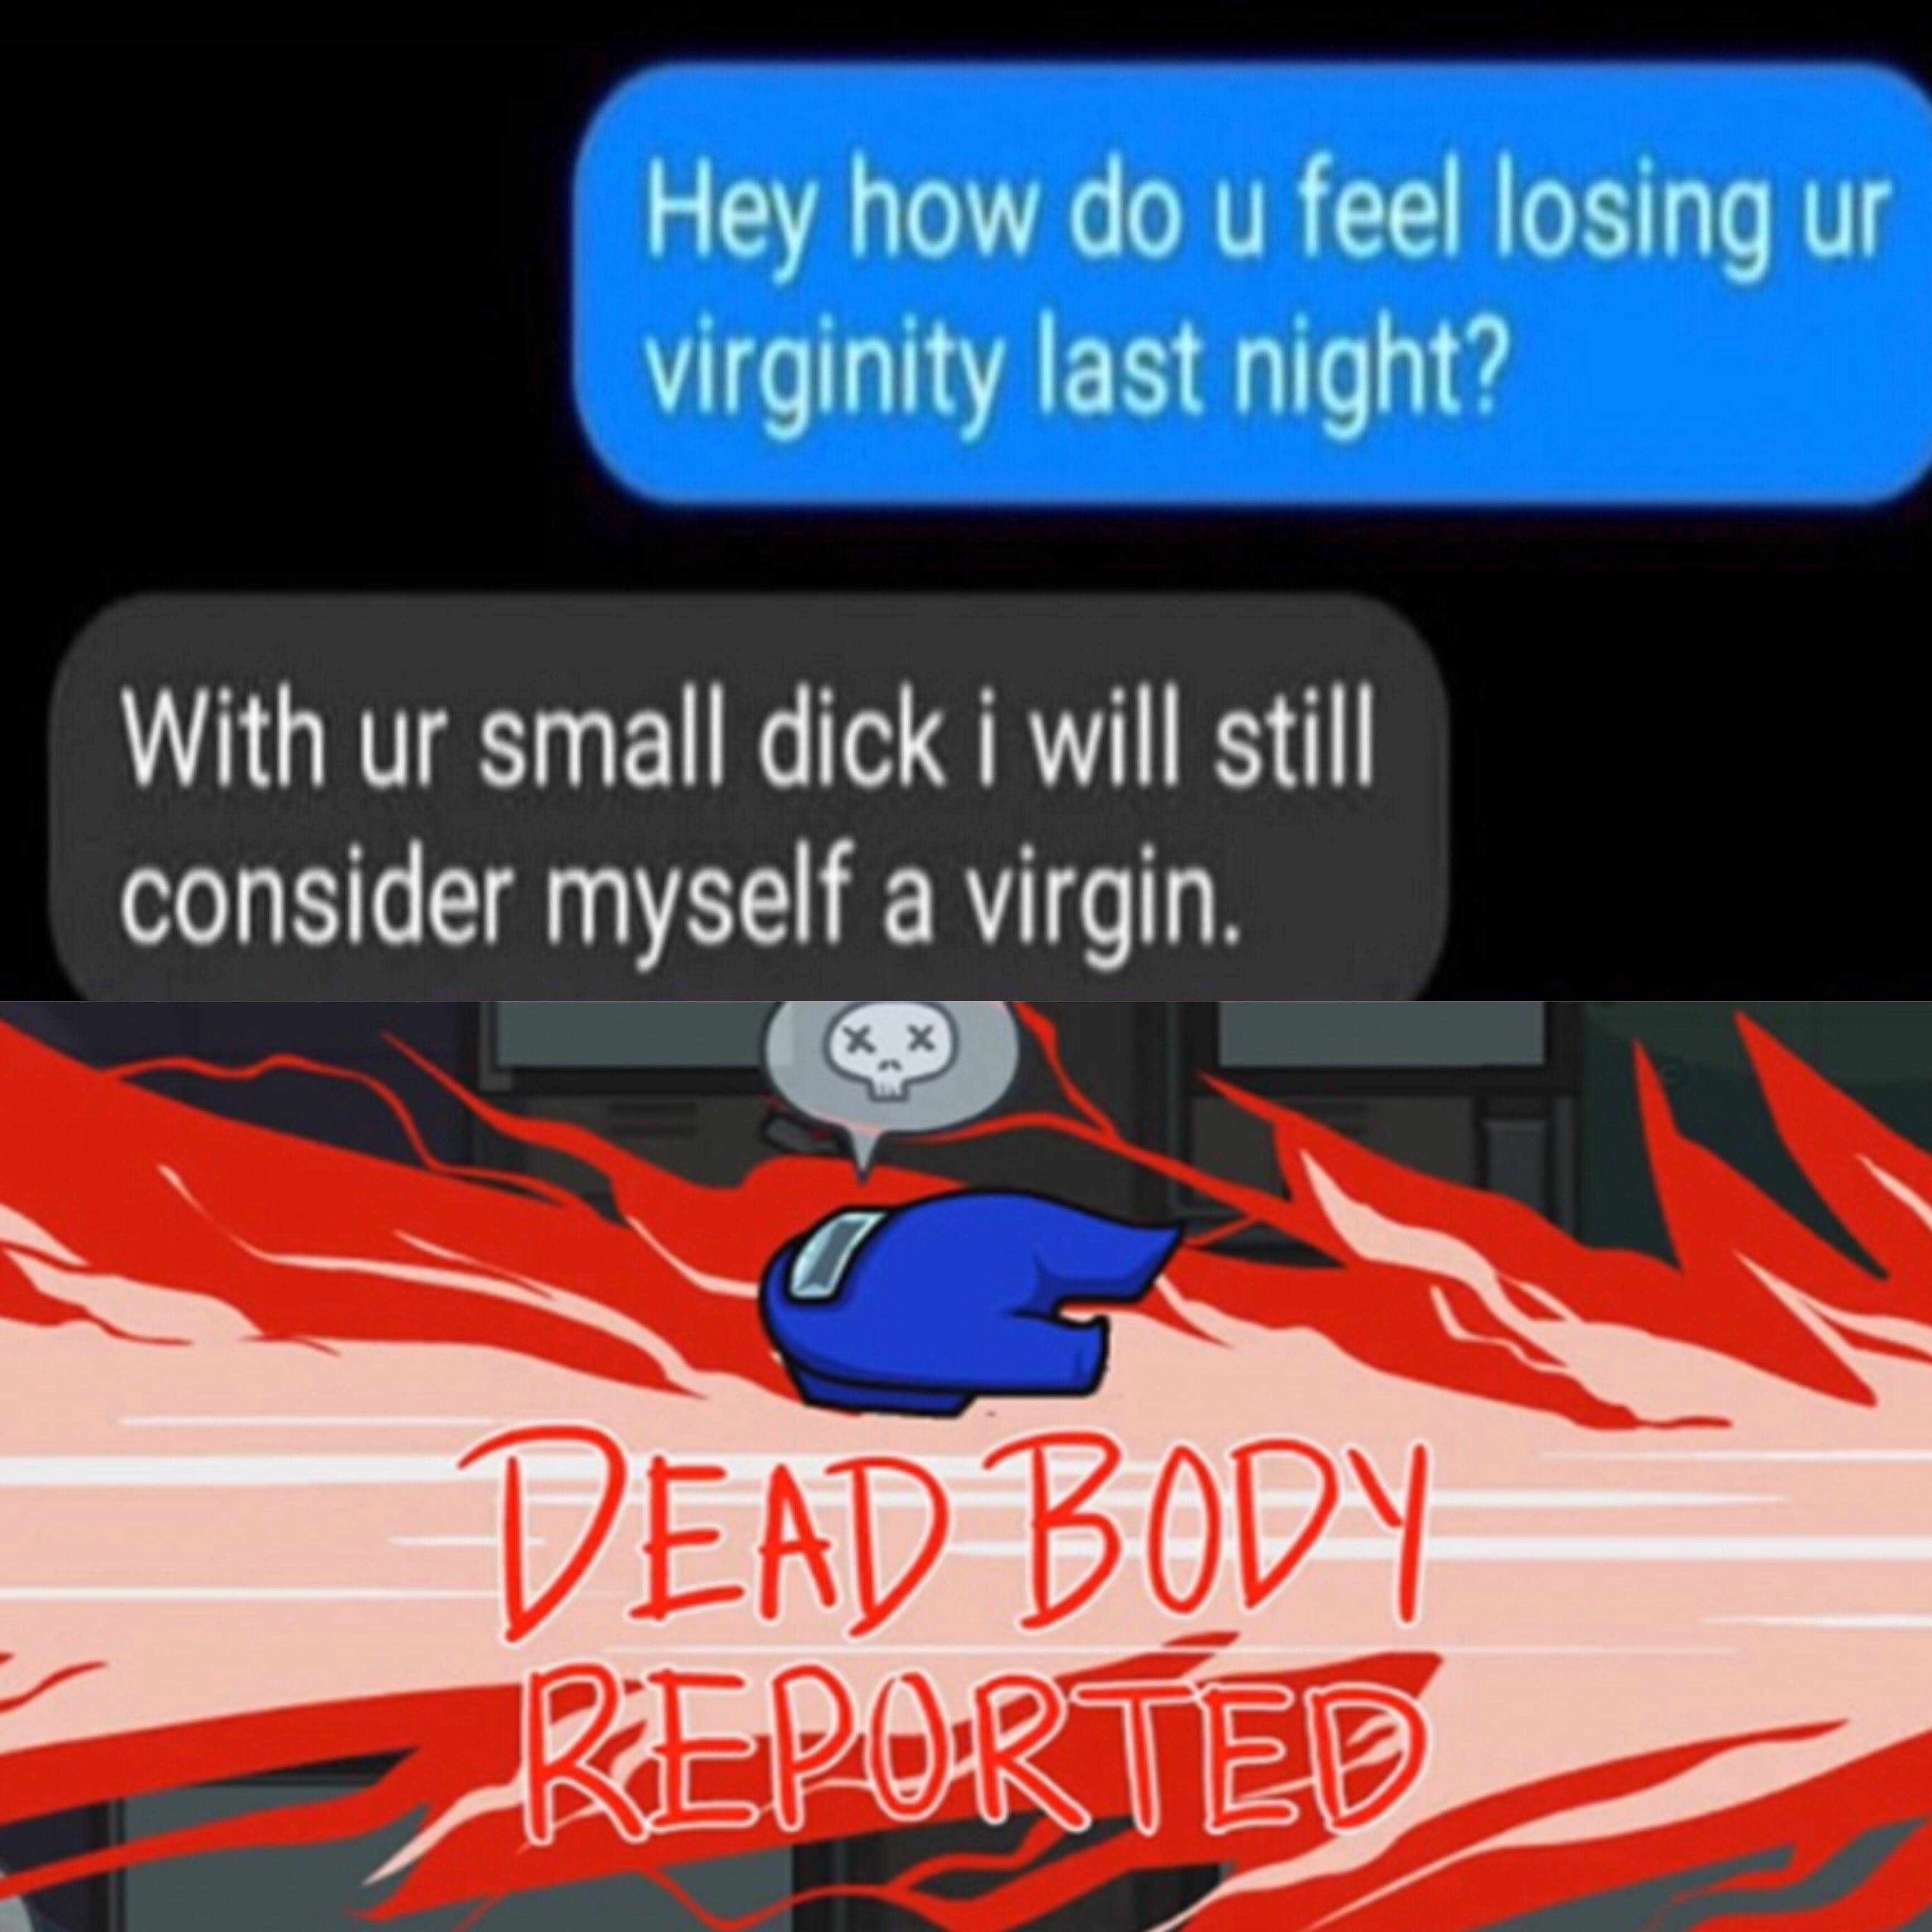 dank memes - banner - Hey how do u feel losing ur virginity last night? With ur small dick i will still consider myself a virgin. Dead Body Reported